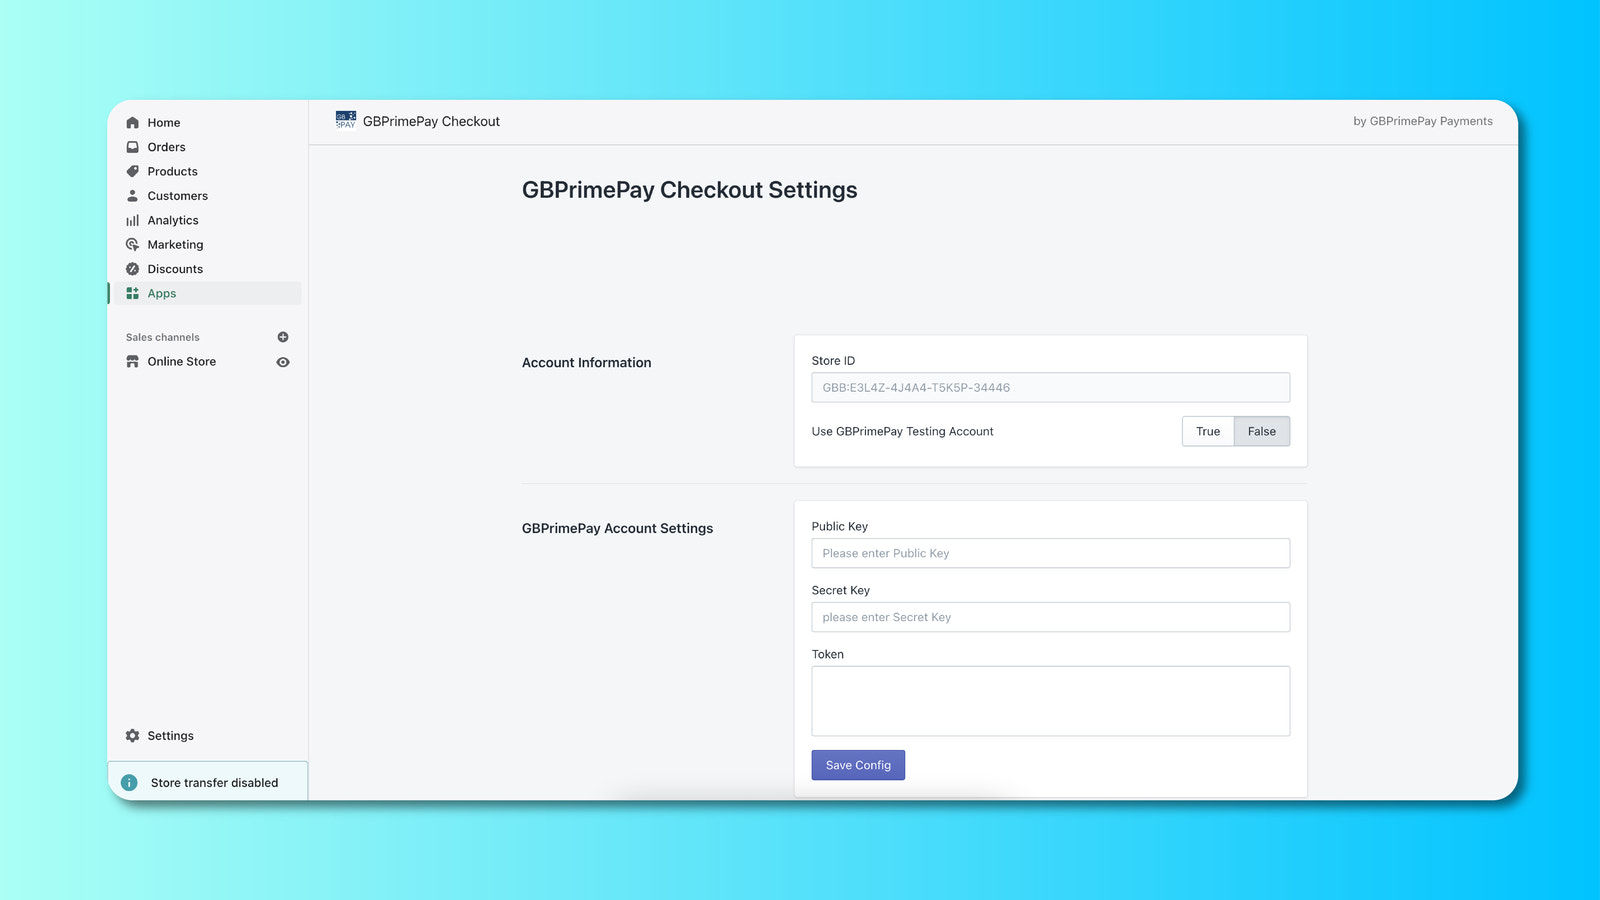 Configuración de GBPrimePay Checkout desde la página de administración de Shopify